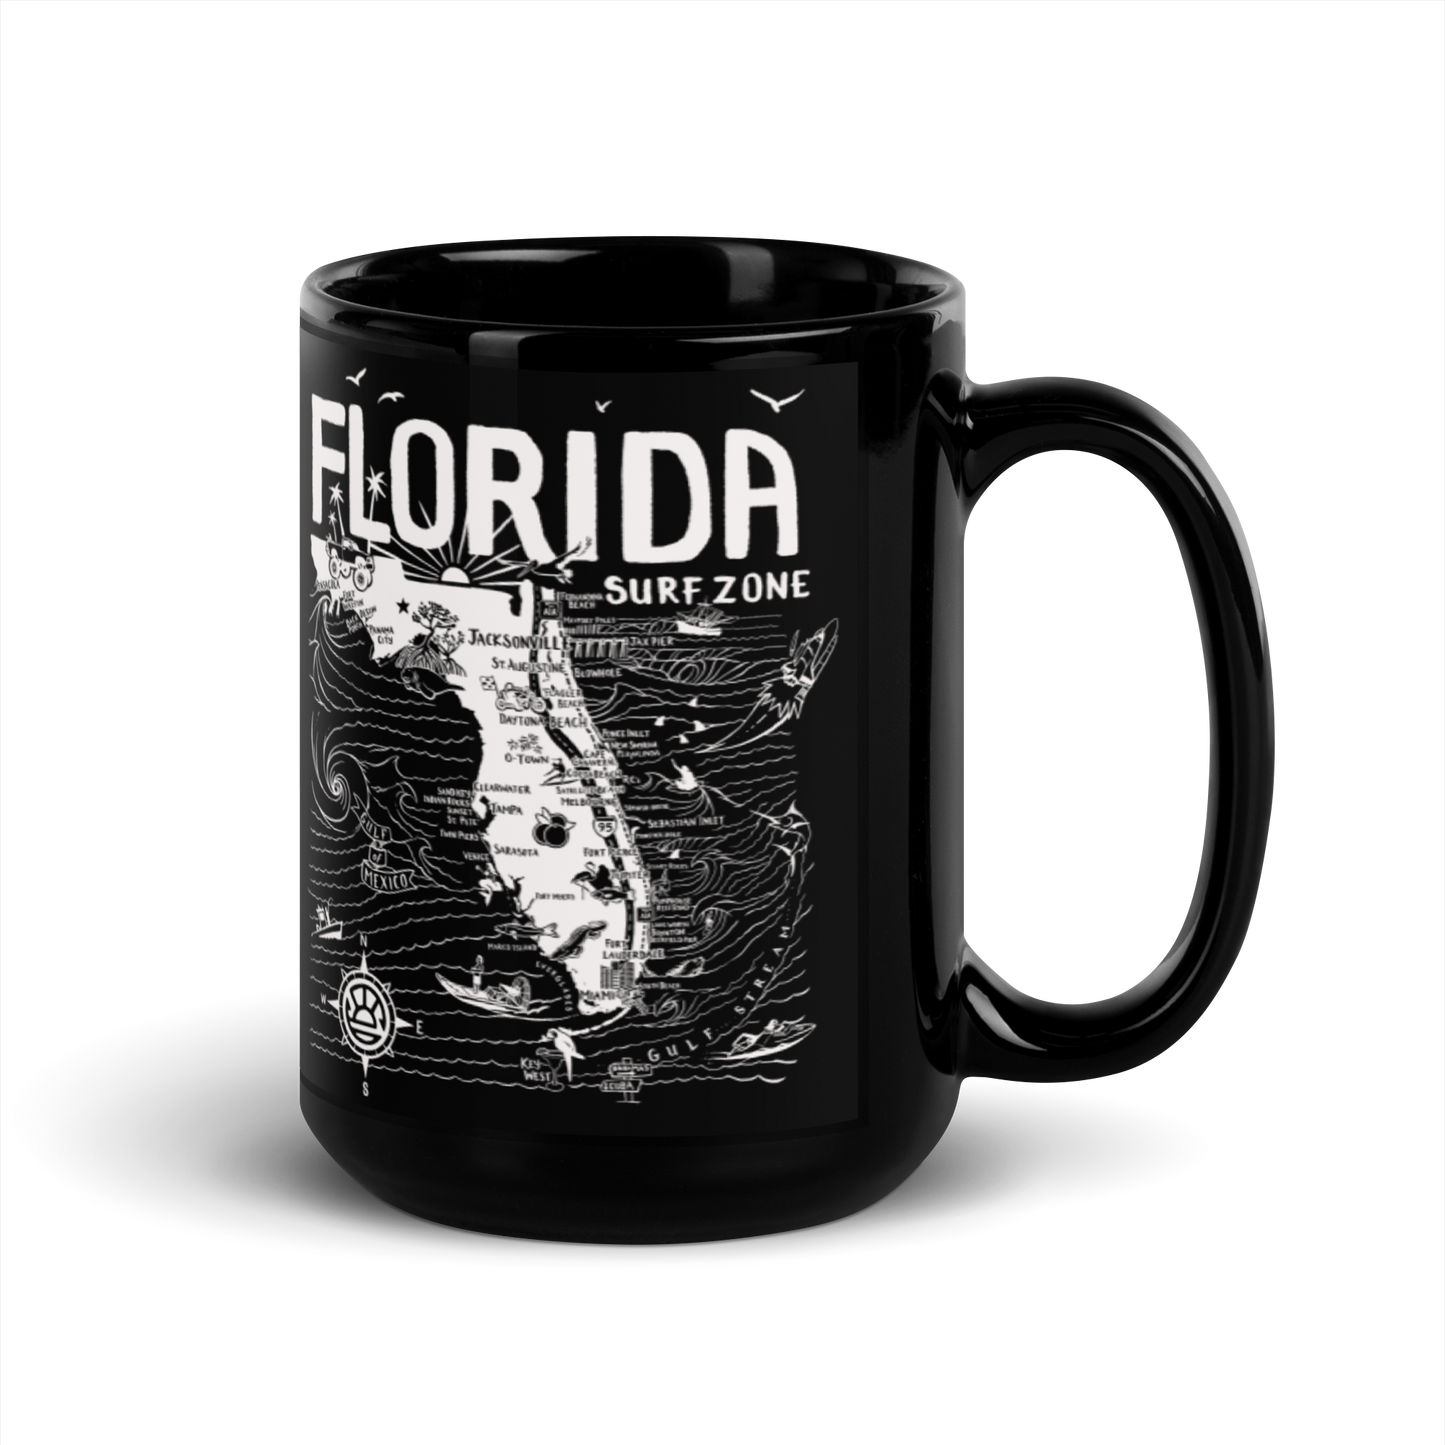 FLORIDA Map Mug